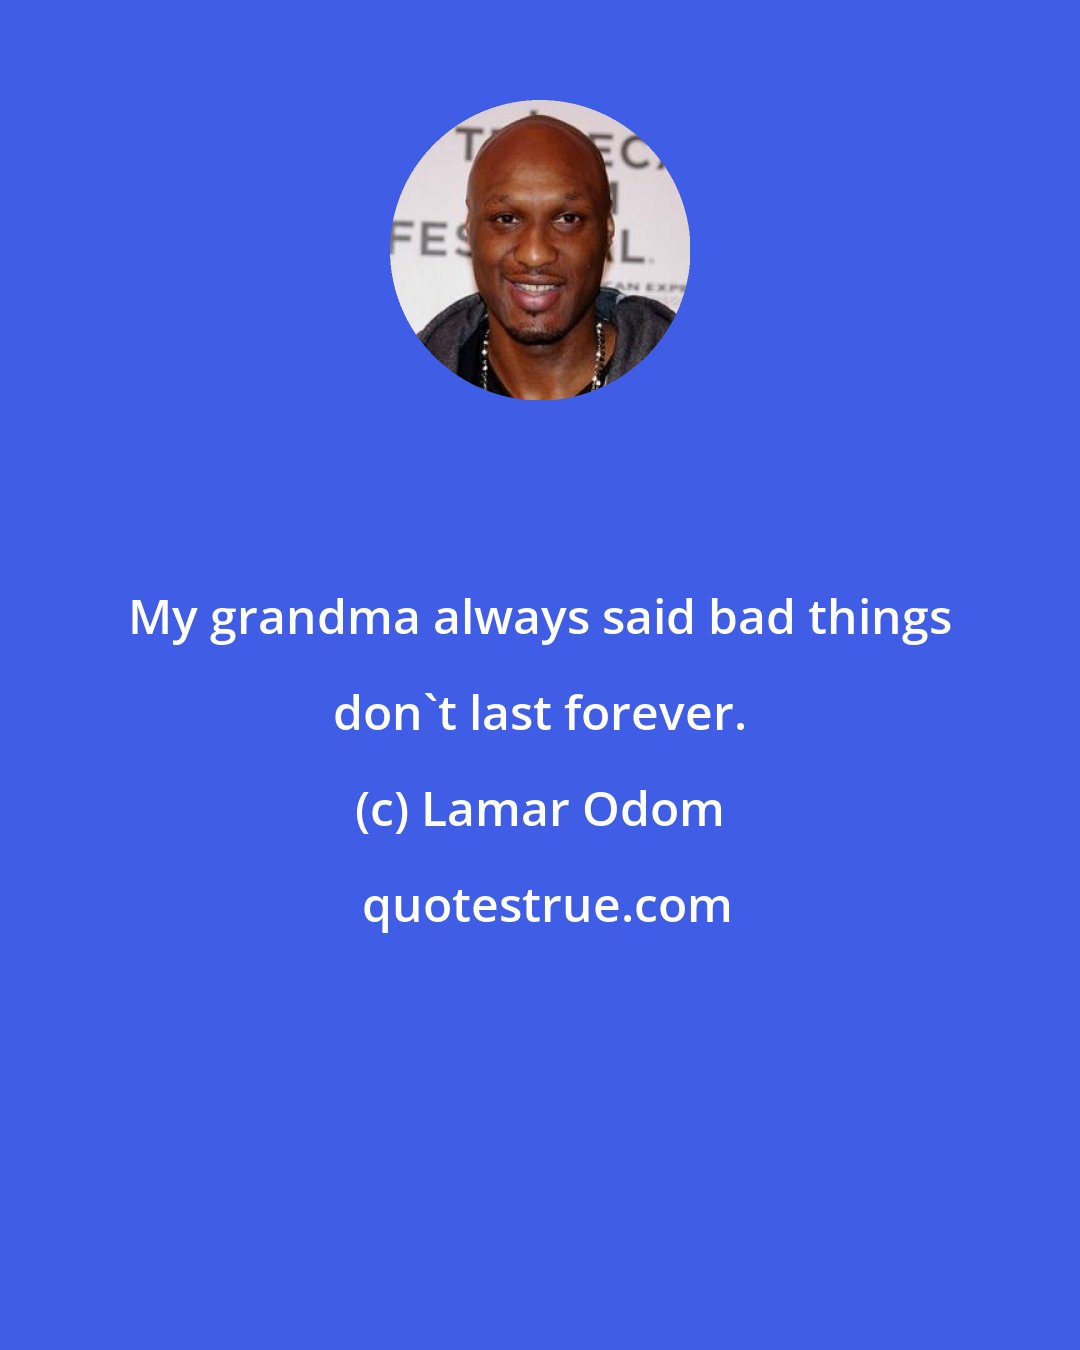 Lamar Odom: My grandma always said bad things don't last forever.